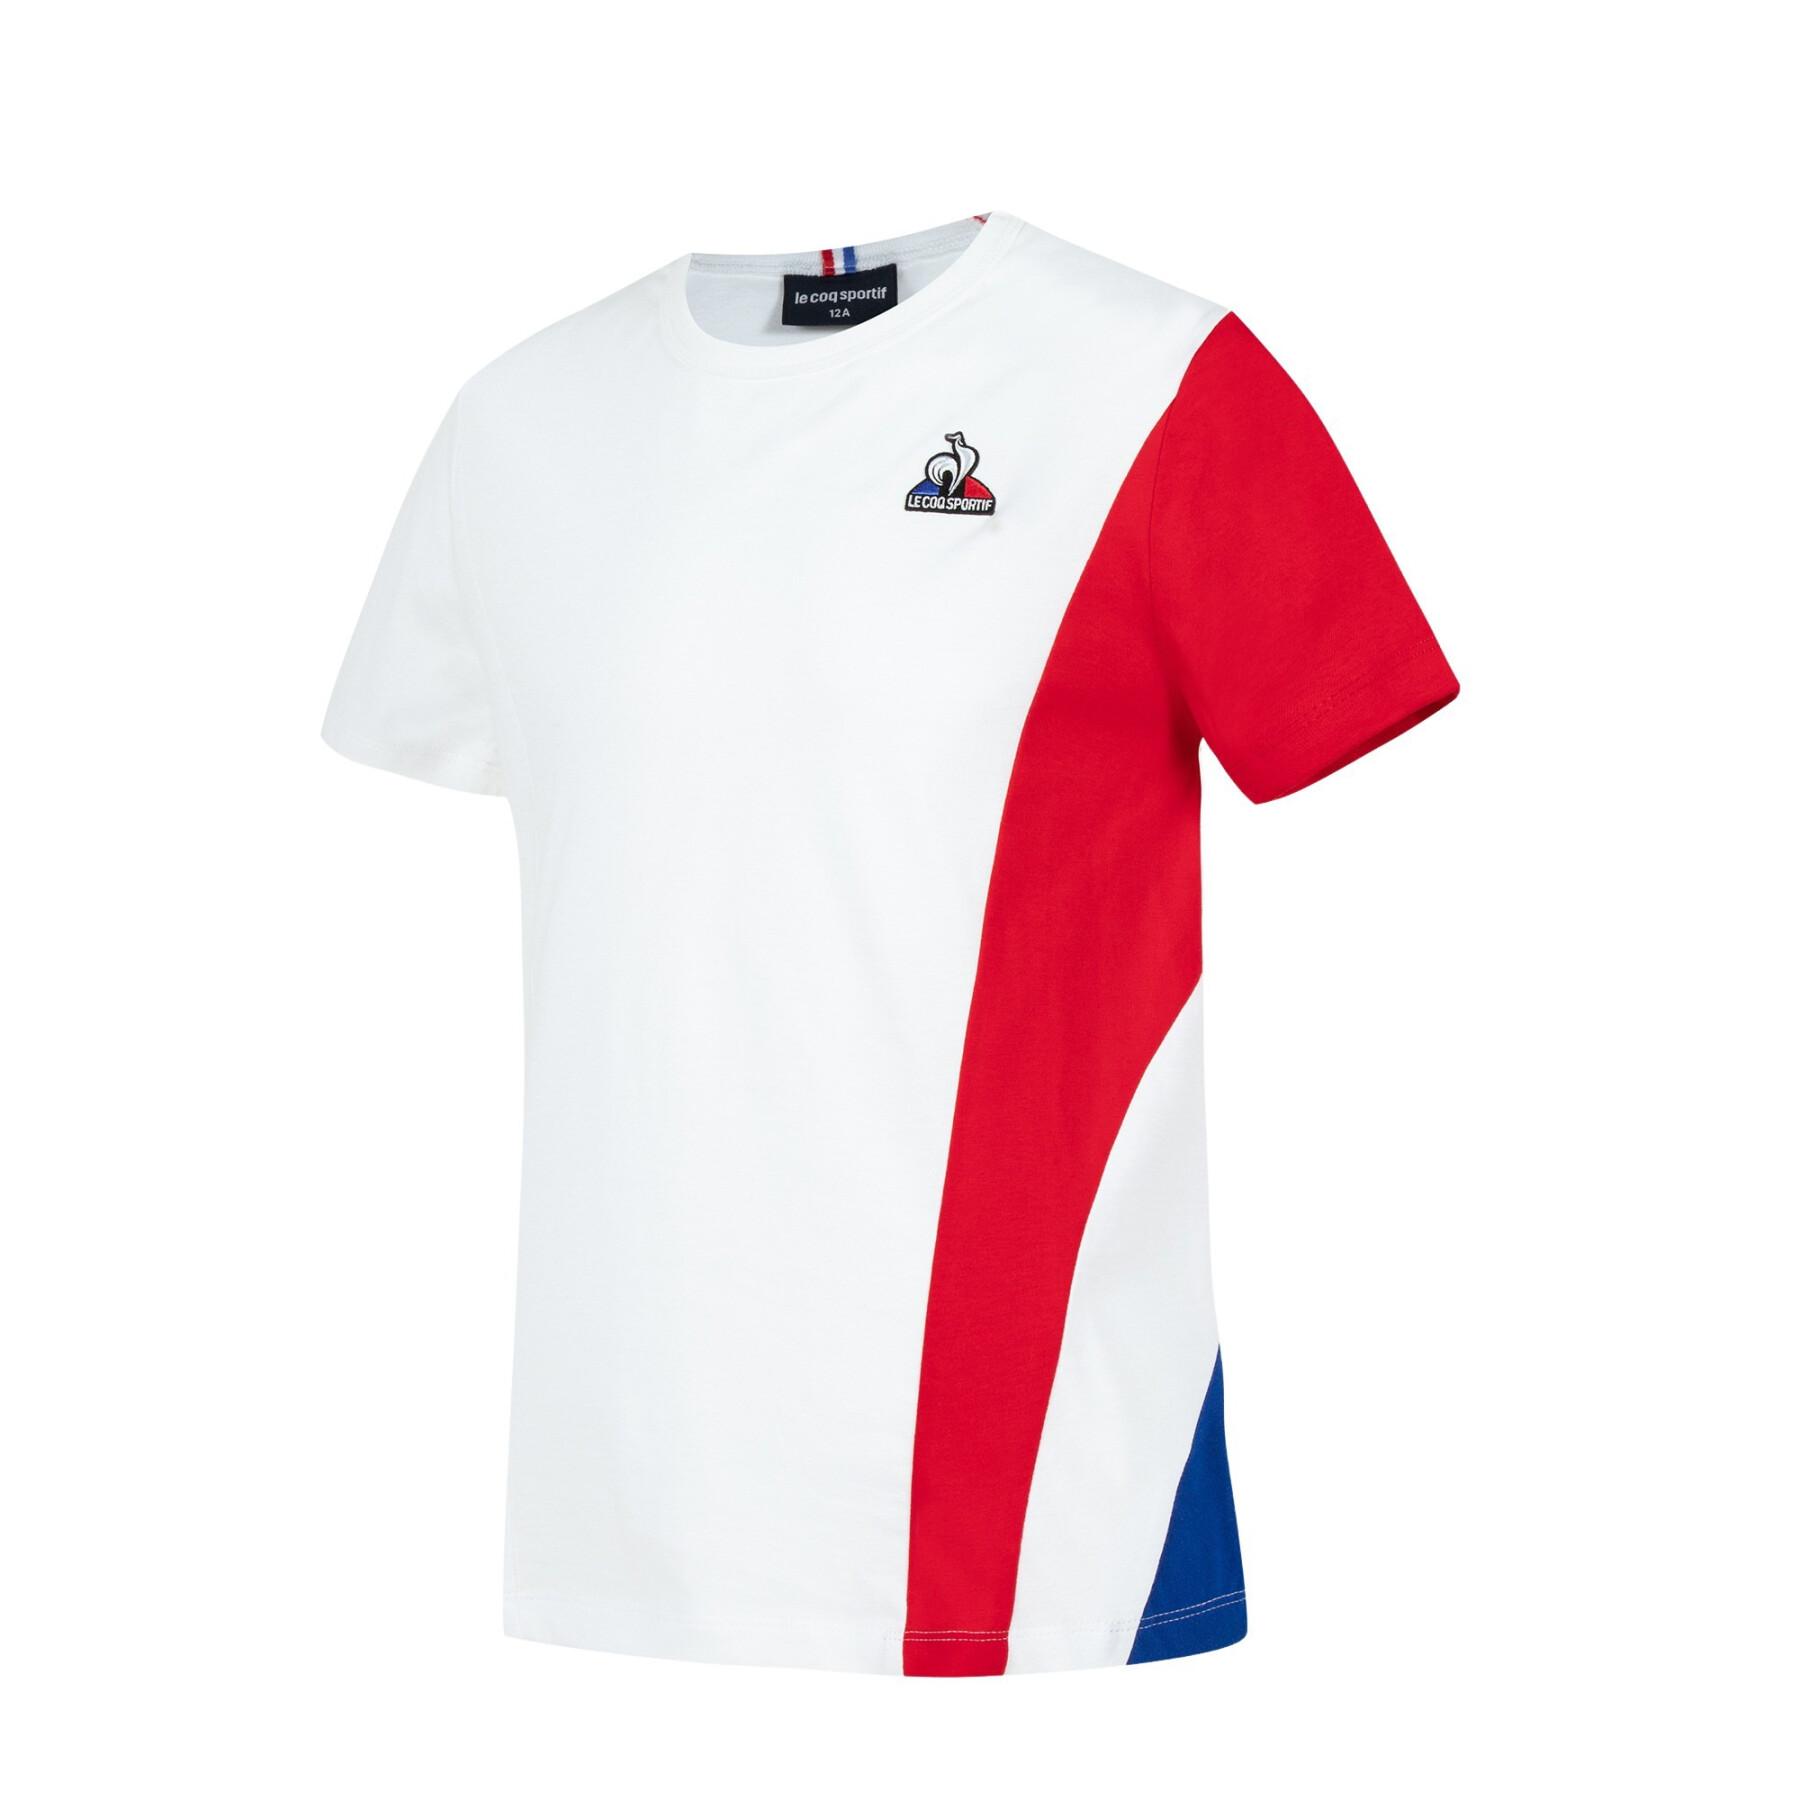 Camiseta para niños Le Coq Sportif Tri N°1 - Camisetas camisas tirantes - Ropa - Niñas